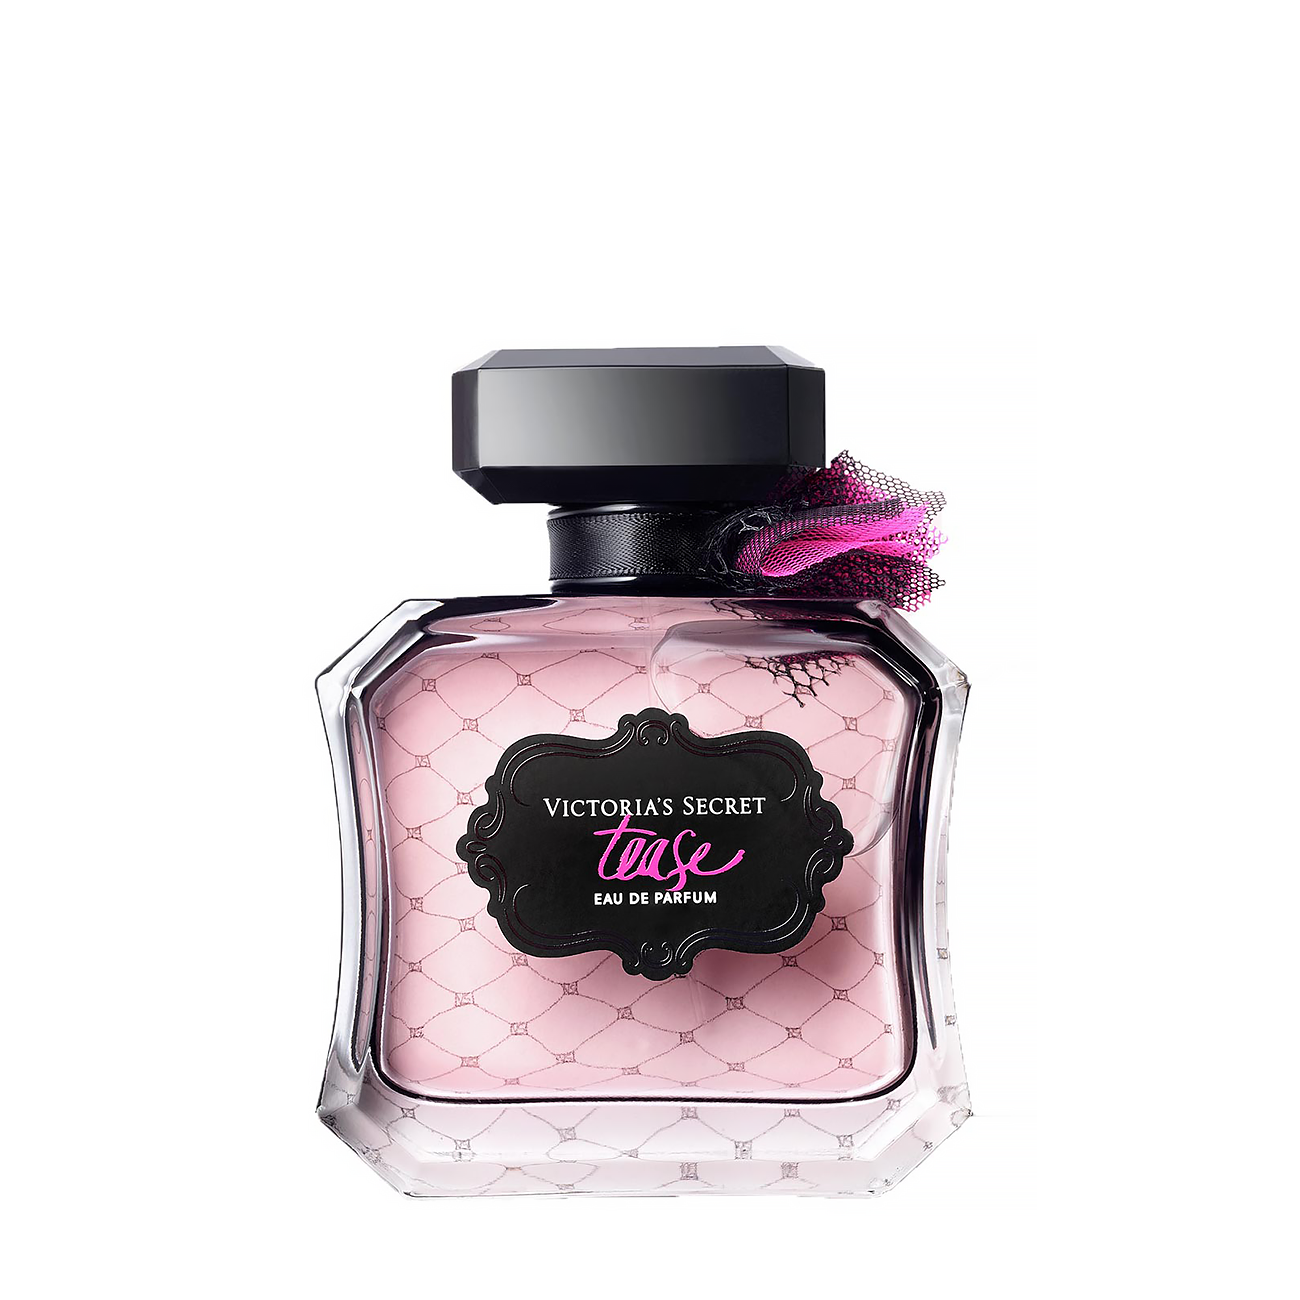 Apa de Parfum Victoria’s Secret TEASE 50ml cu comanda online